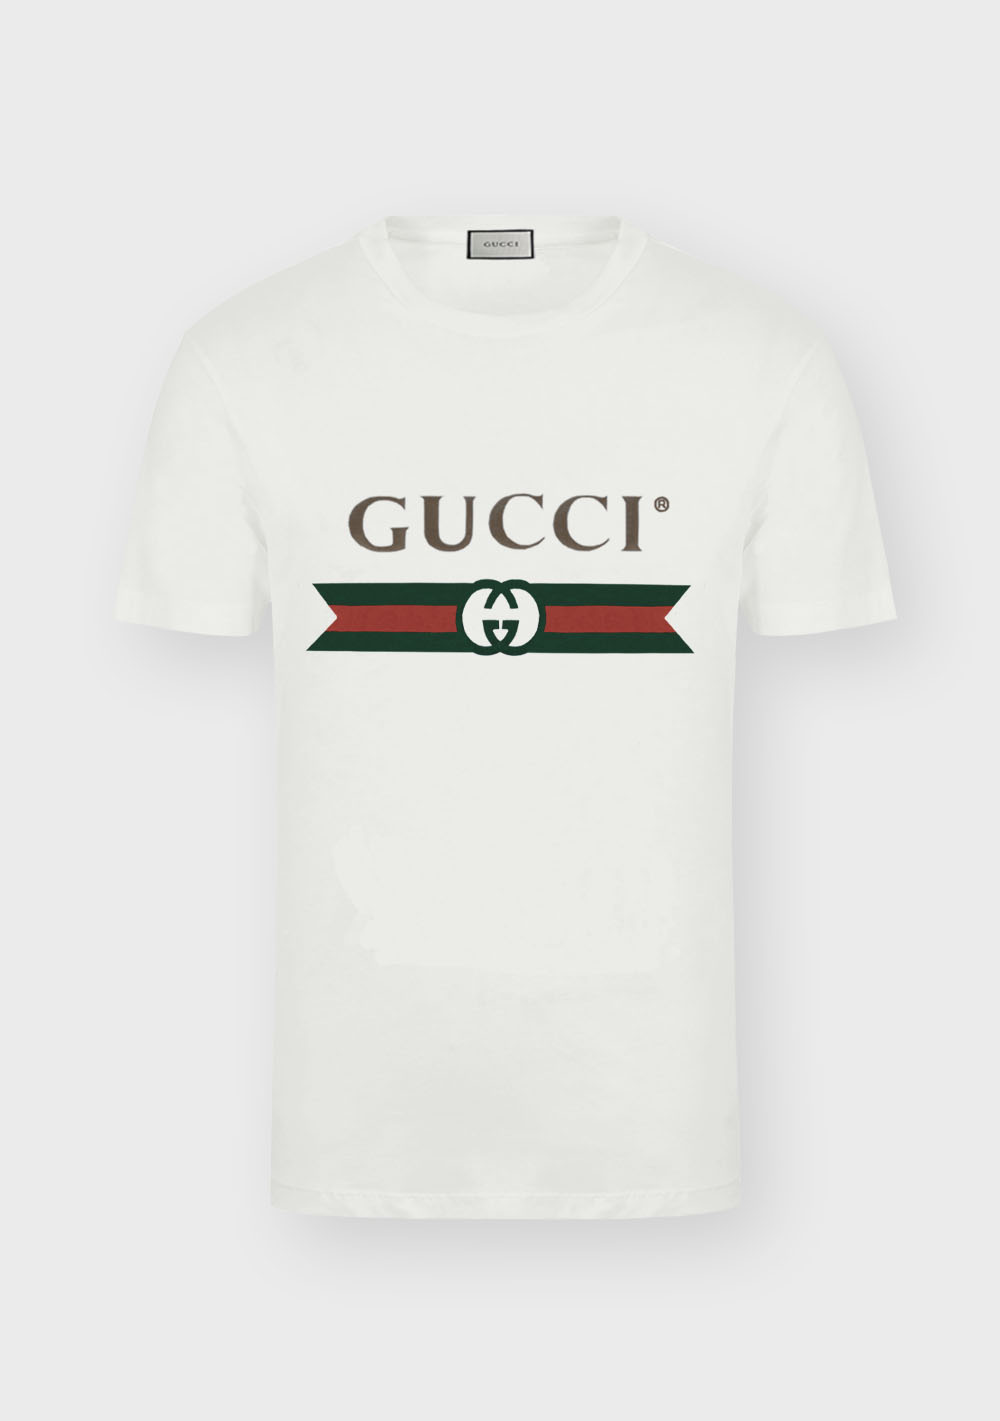 gucci t shirt 1st copy